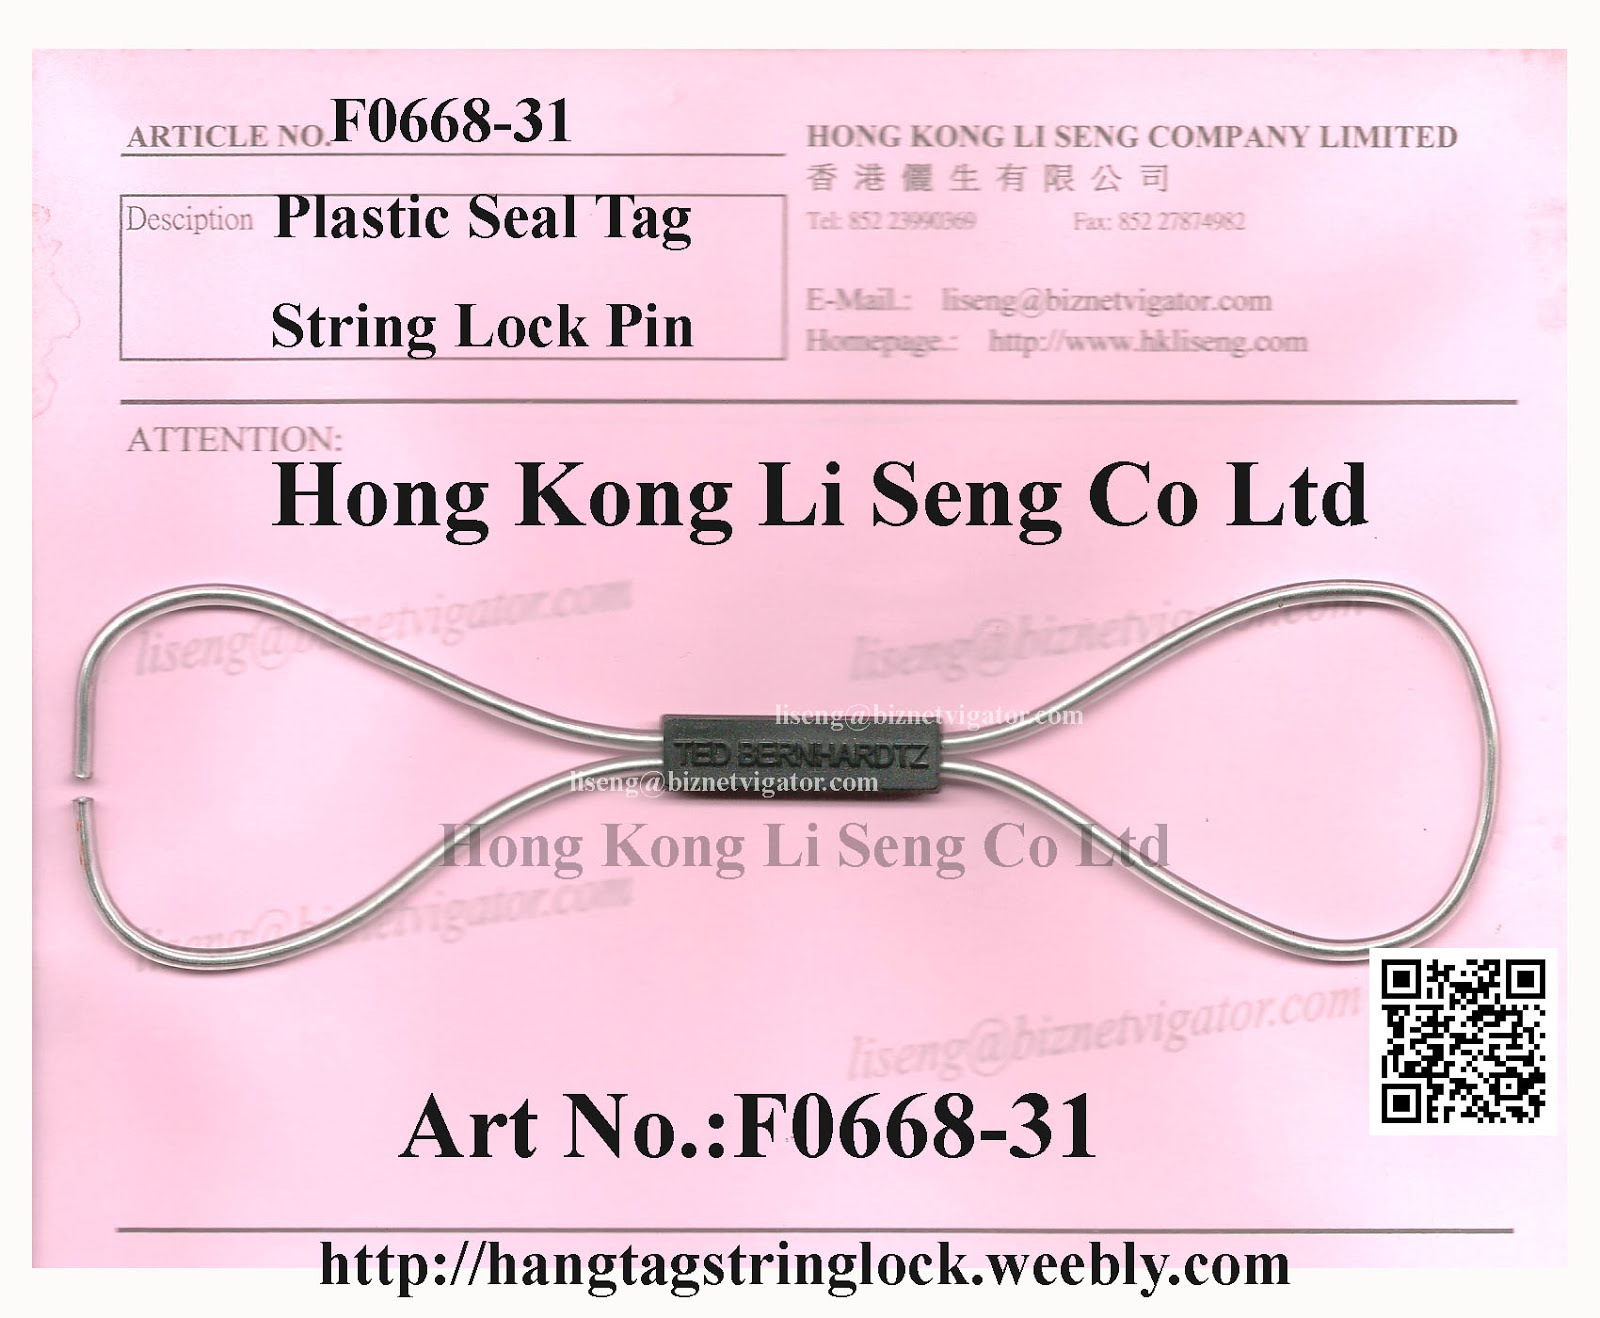 TED BERNHARDTZ - Plastic Seal ( Hang Tag Wire Locking ) String Lock